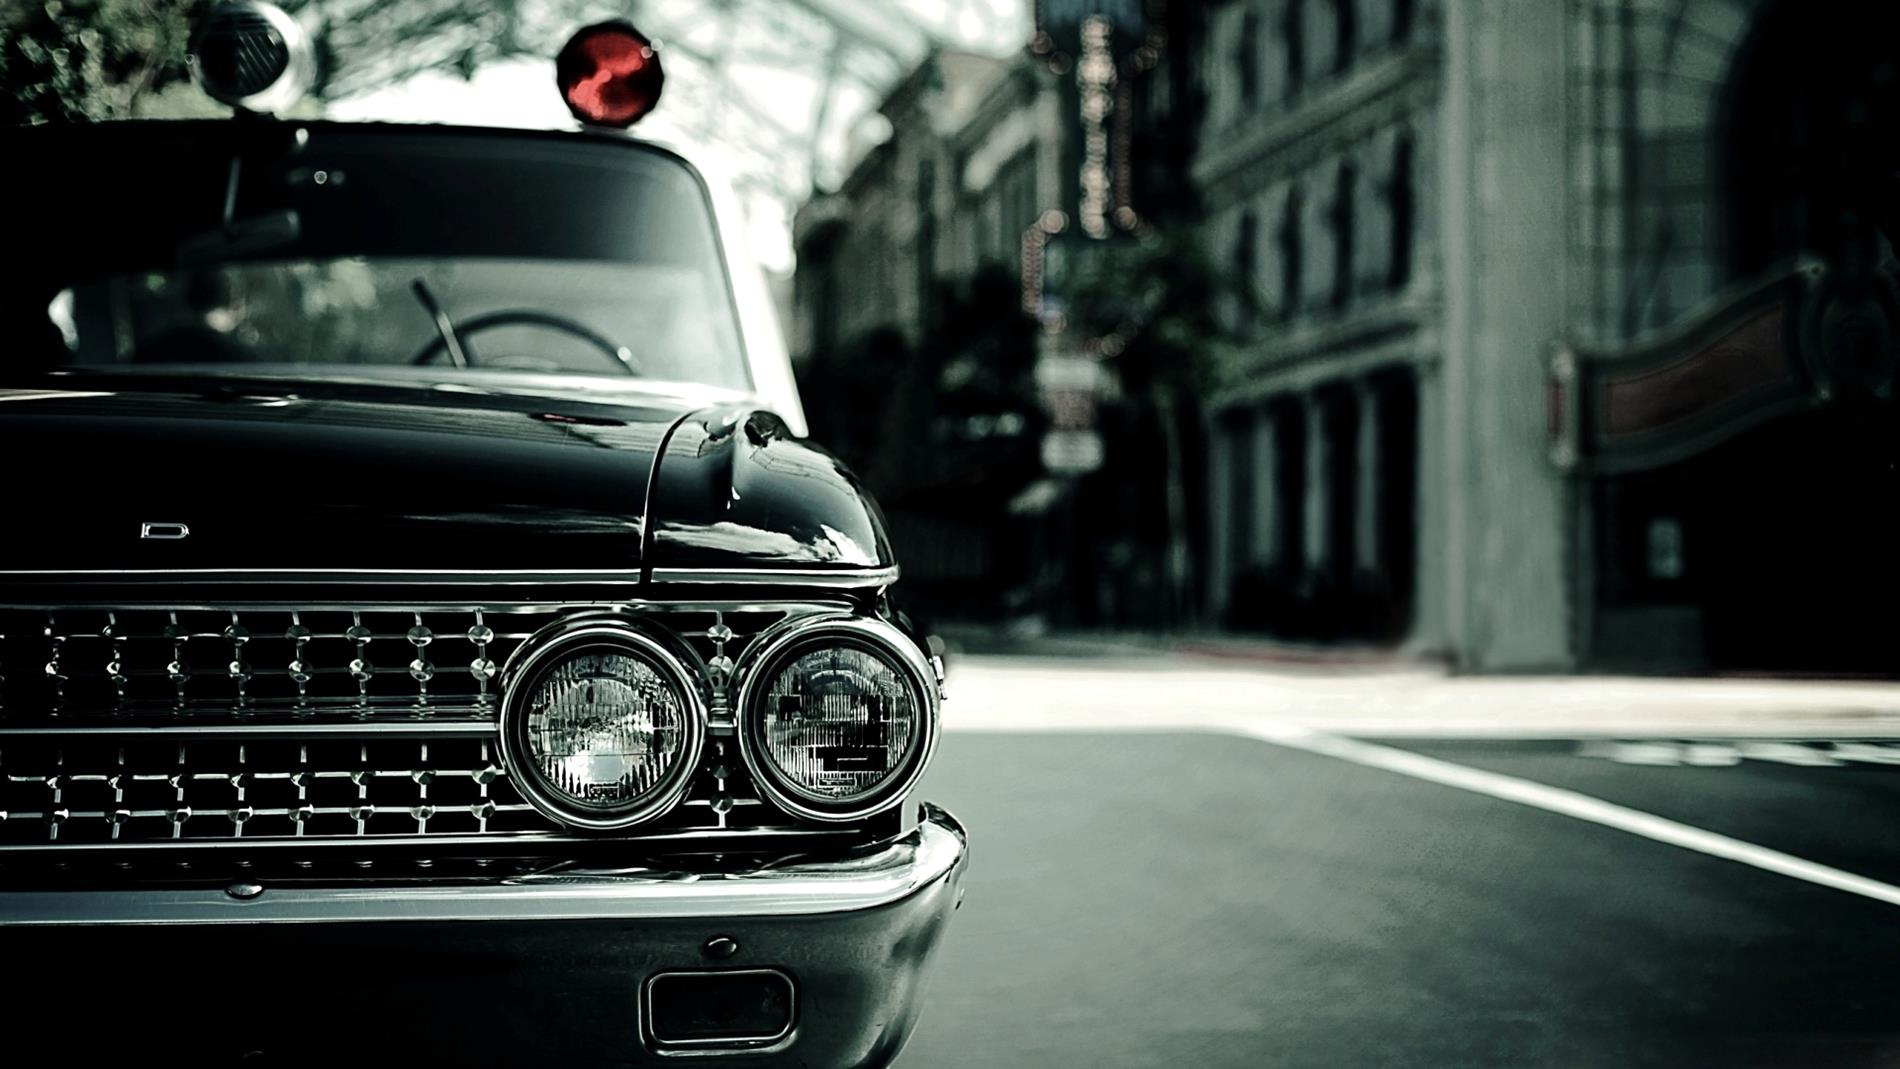 The-Best-Vintage-Car-Wallpapers-13-Best Vintage Car-wv-aston martin-ferarri